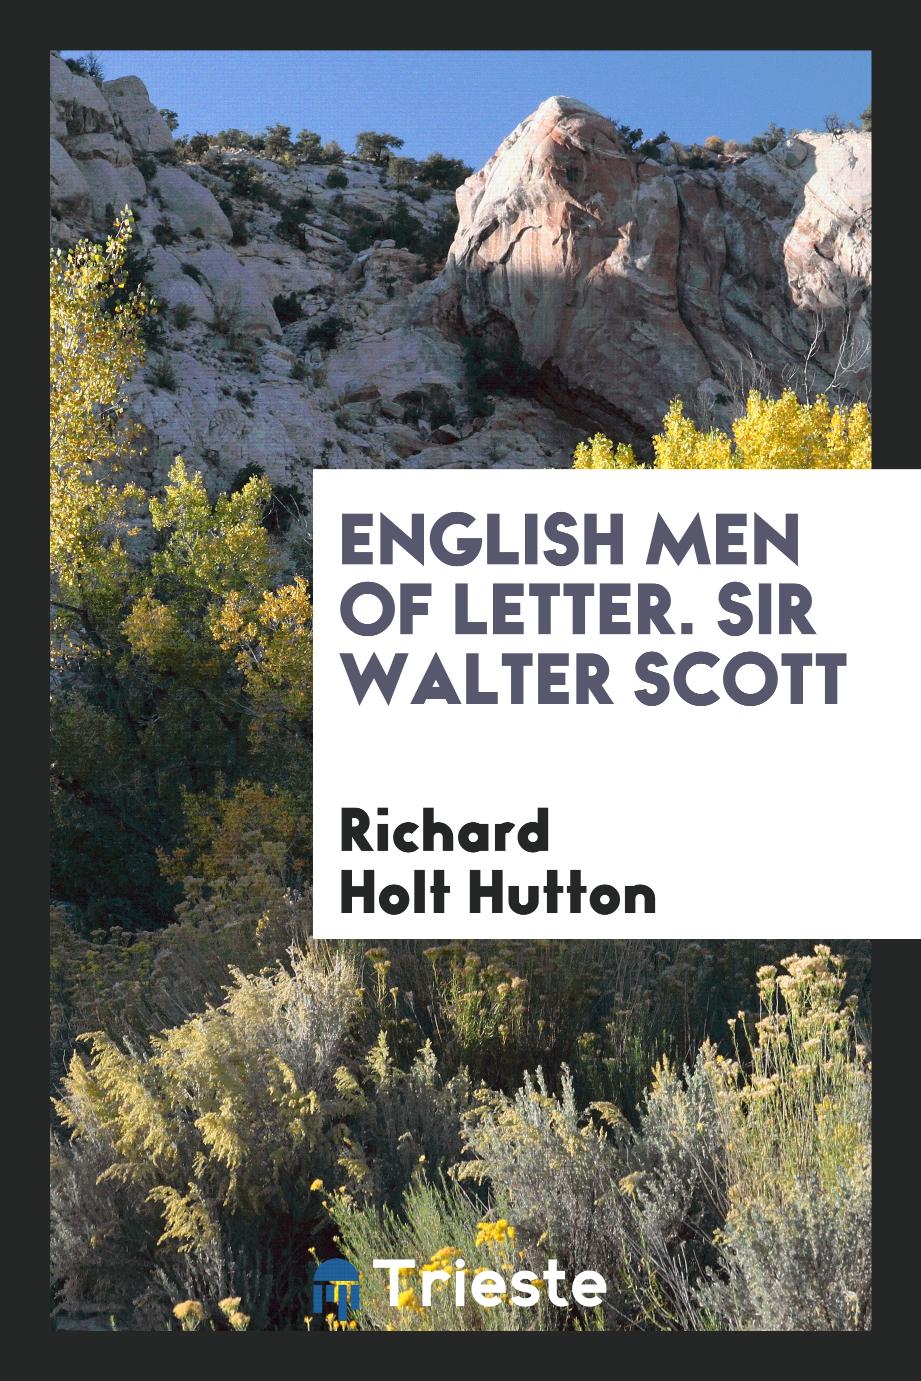 English men of letter. Sir Walter Scott